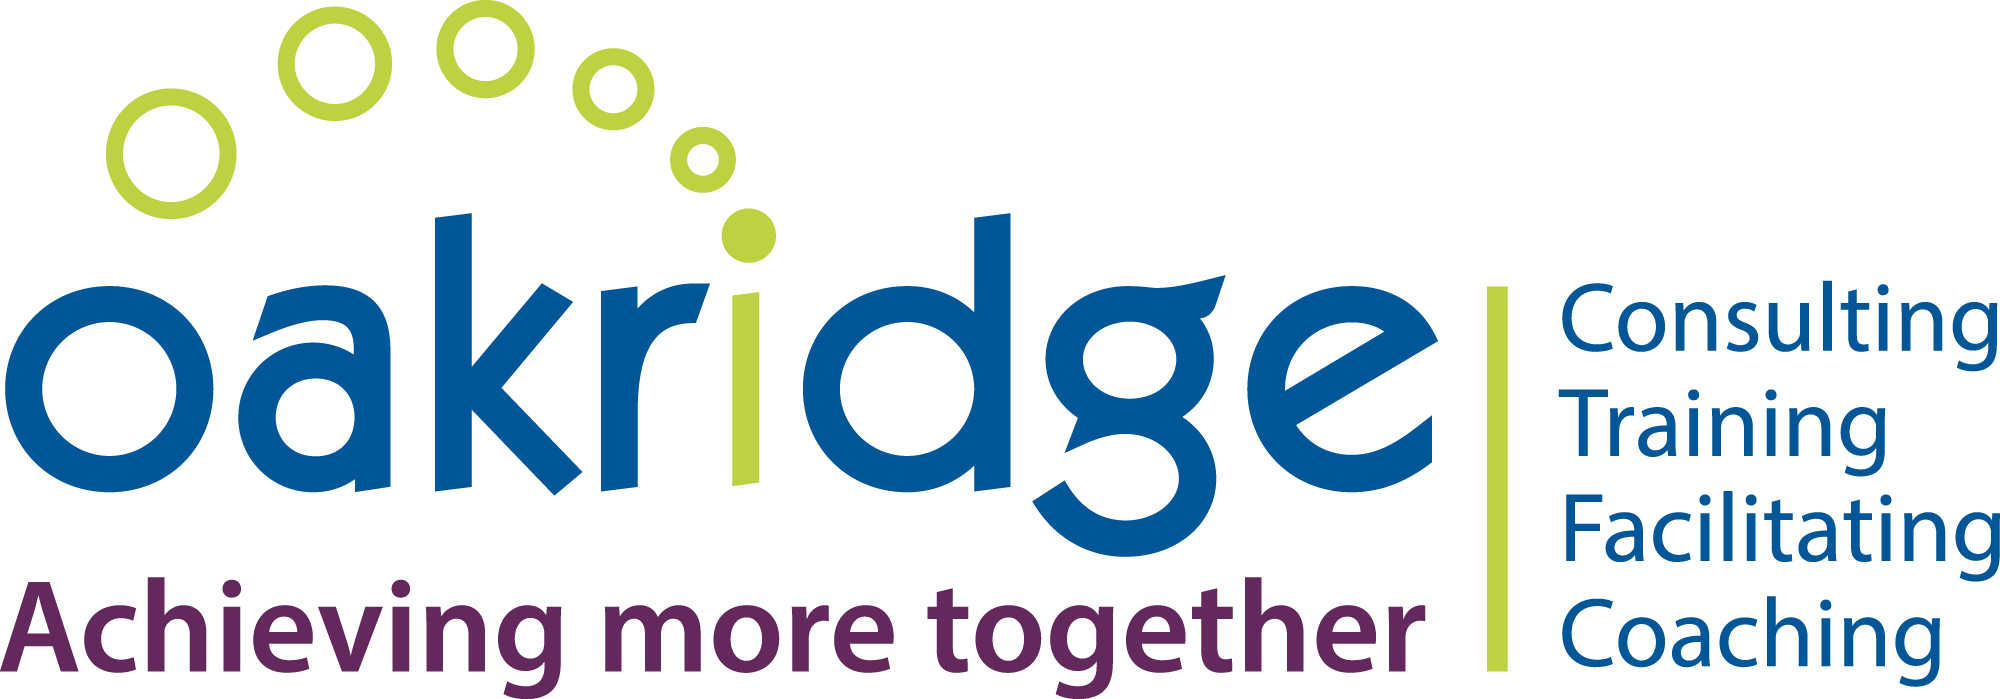 https://www.pro-manchester.co.uk/wp-content/uploads/2015/06/Oakridge-Logo-stack-achieving-new.png